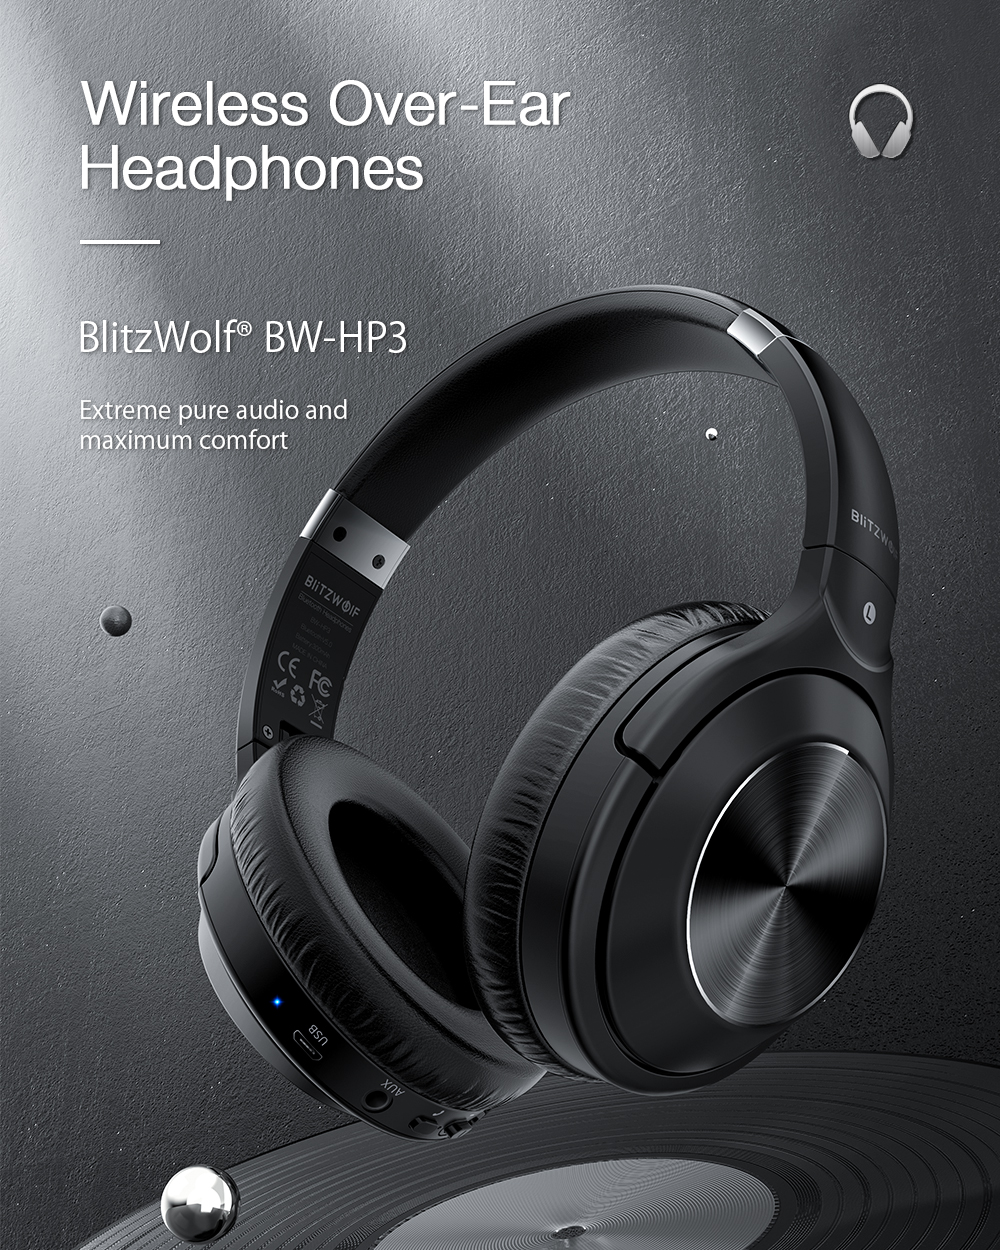 Blitwolf BW-HP3 headphone